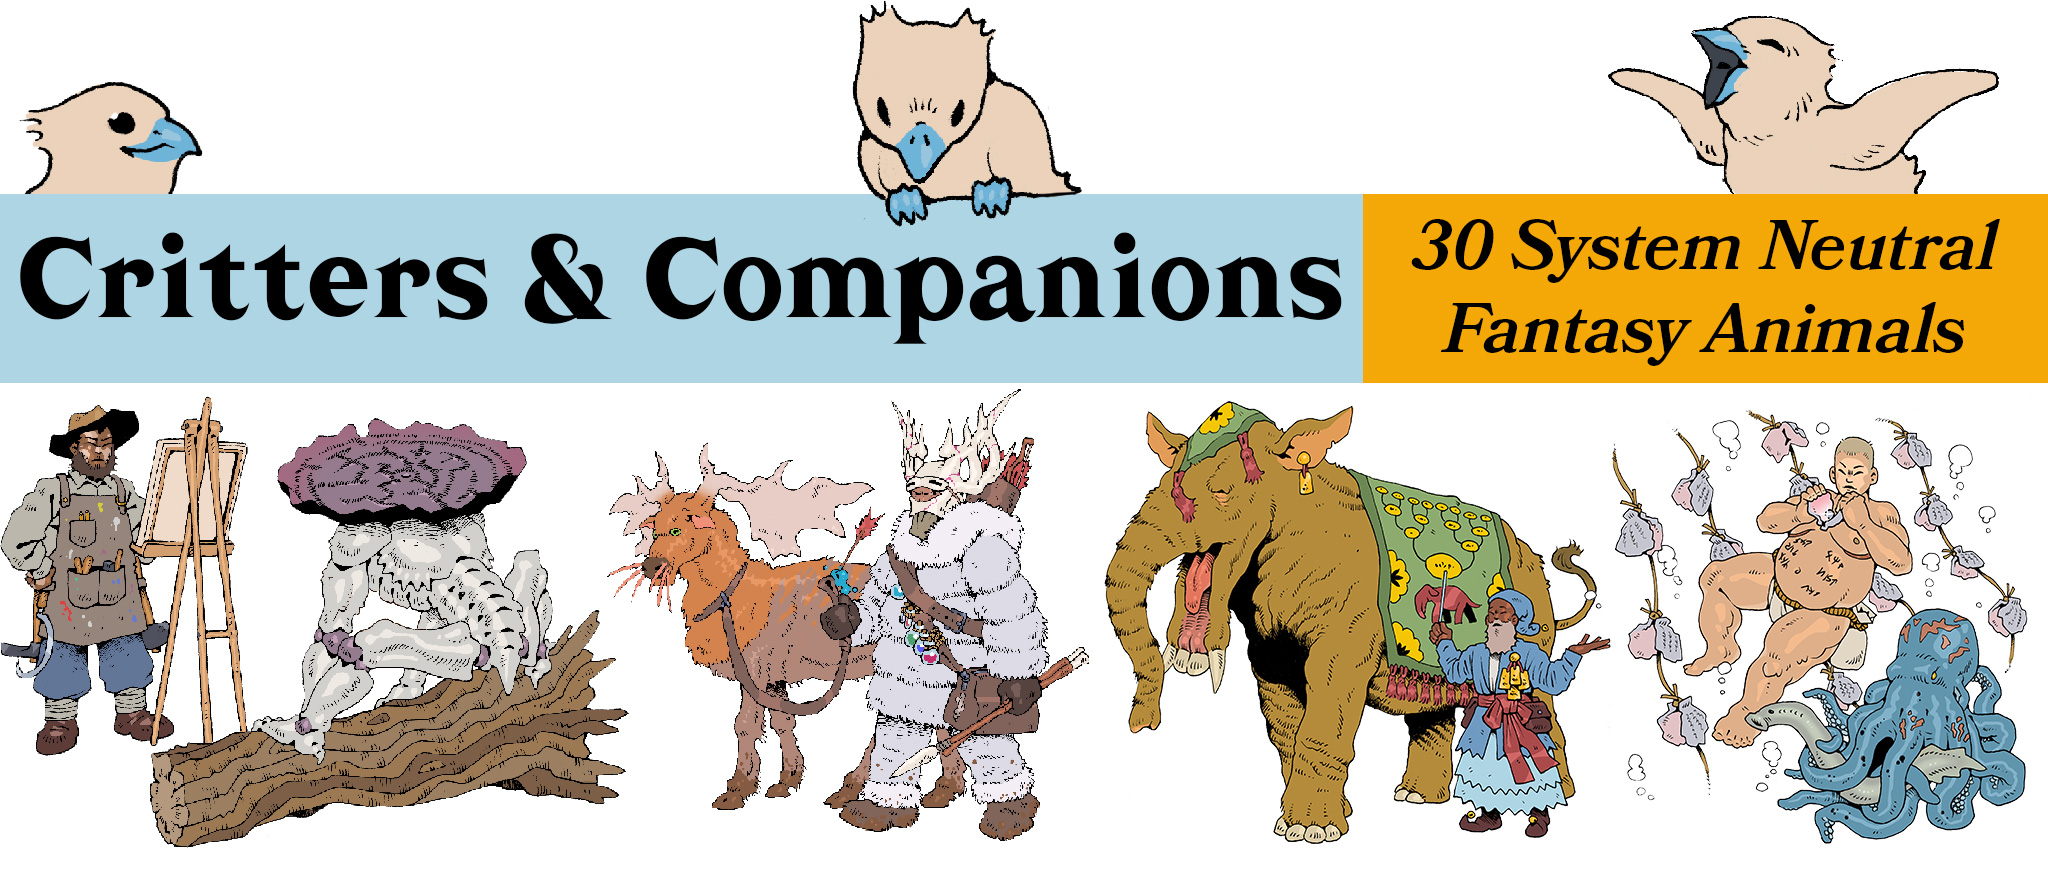 Critters & Companions